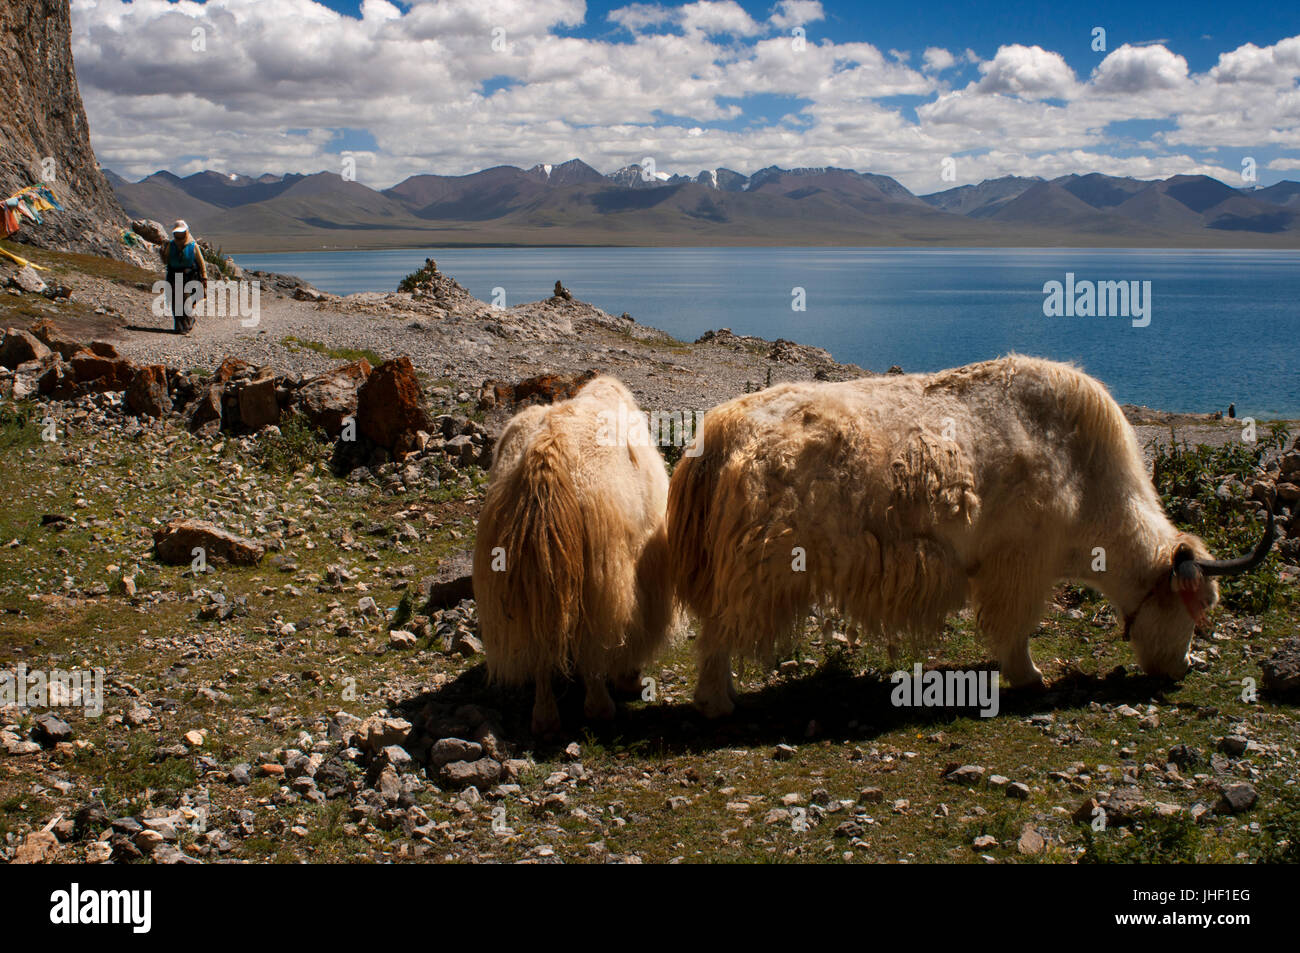 White yaks in Nam Tso Lake (Nam Co) in Nyainqentanglha mountains, Tibet. Stock Photo